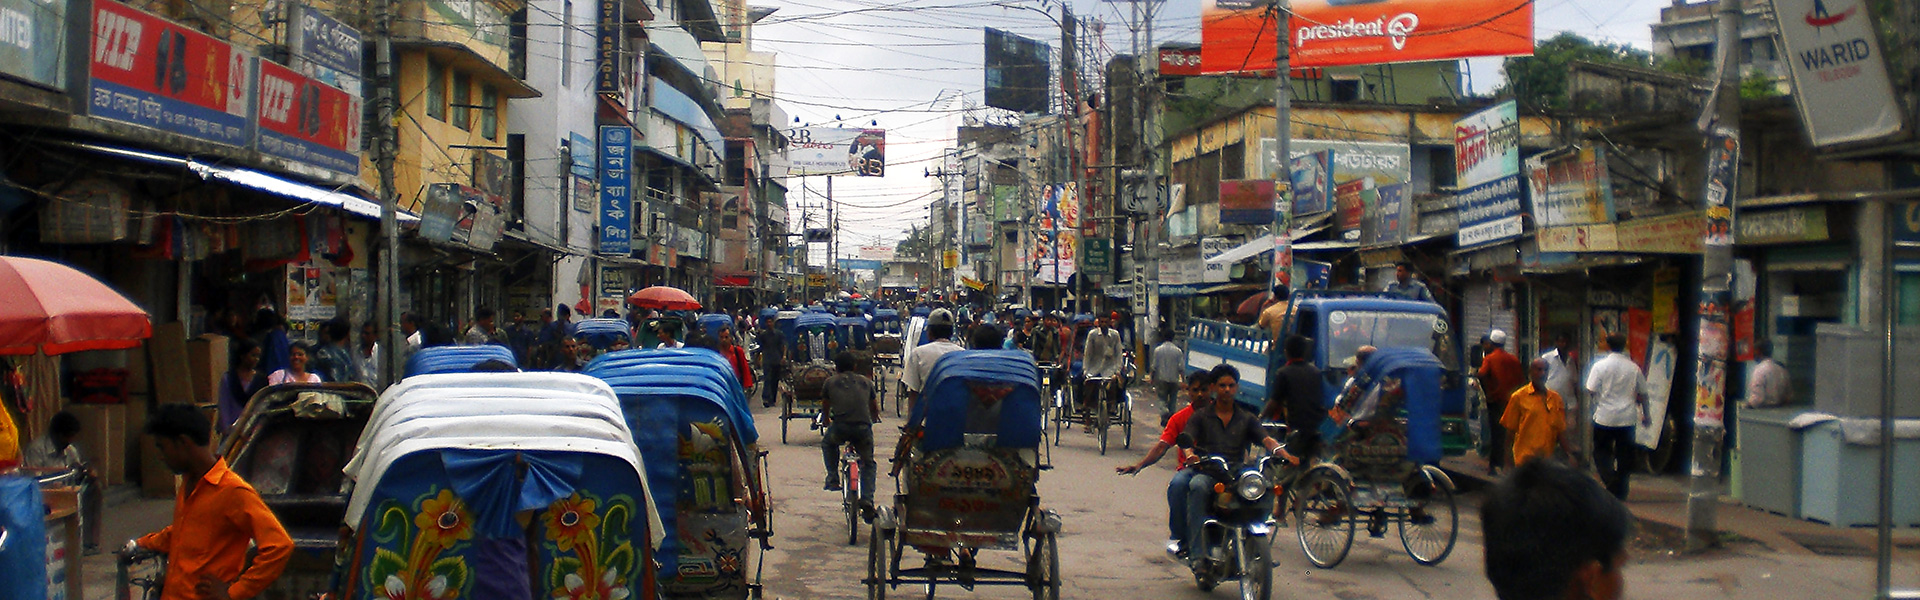 bangladesh-khulna-street-life